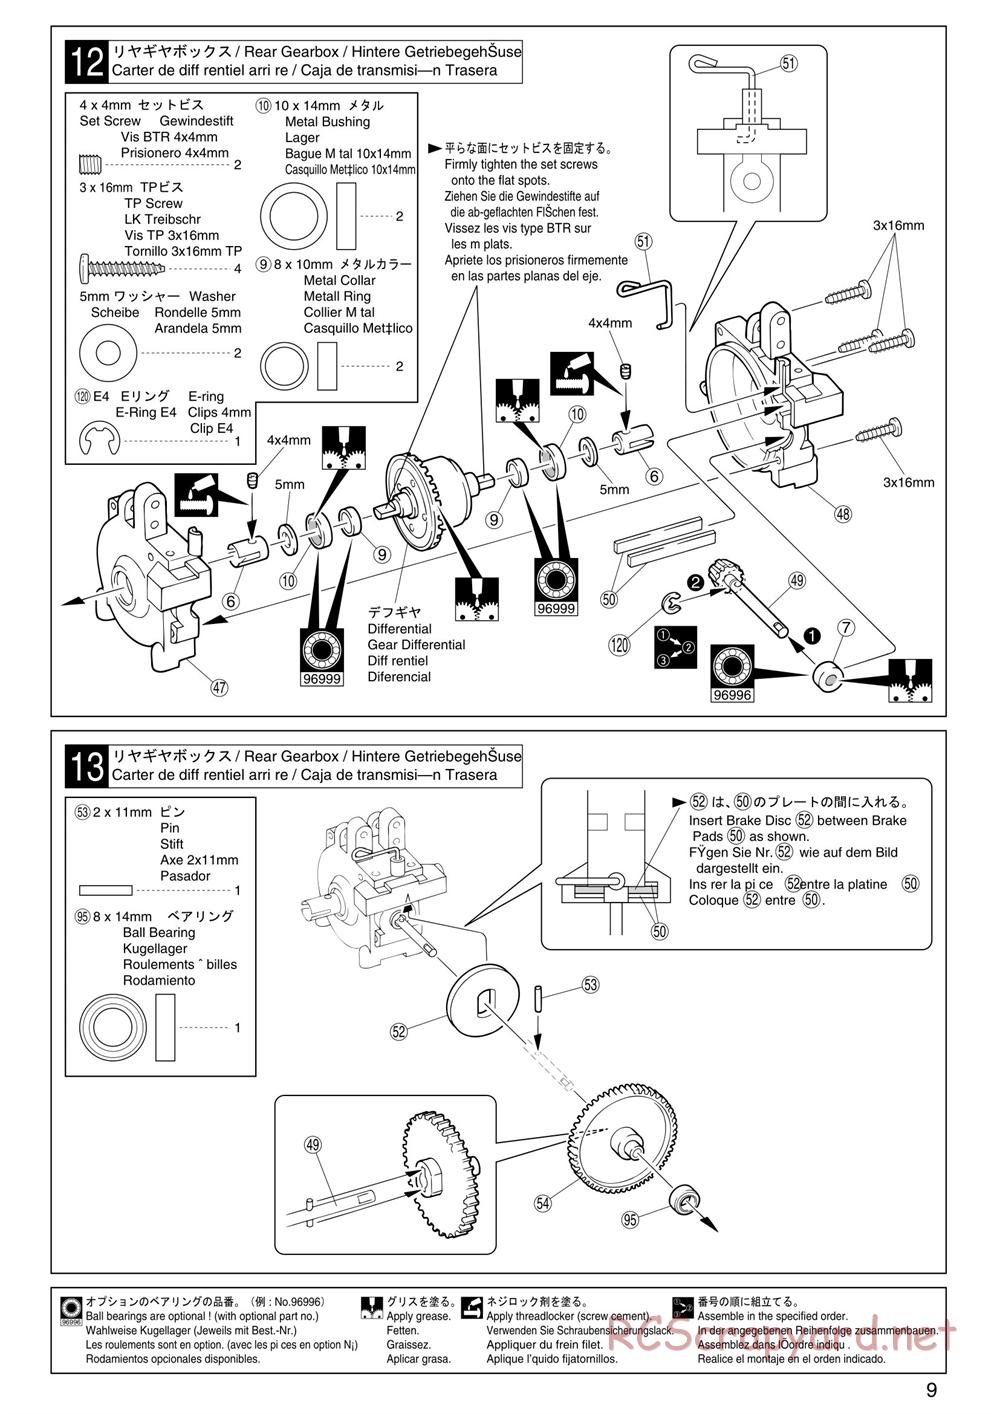 Kyosho - PureTen GP Alpha 2 - Manual - Page 9